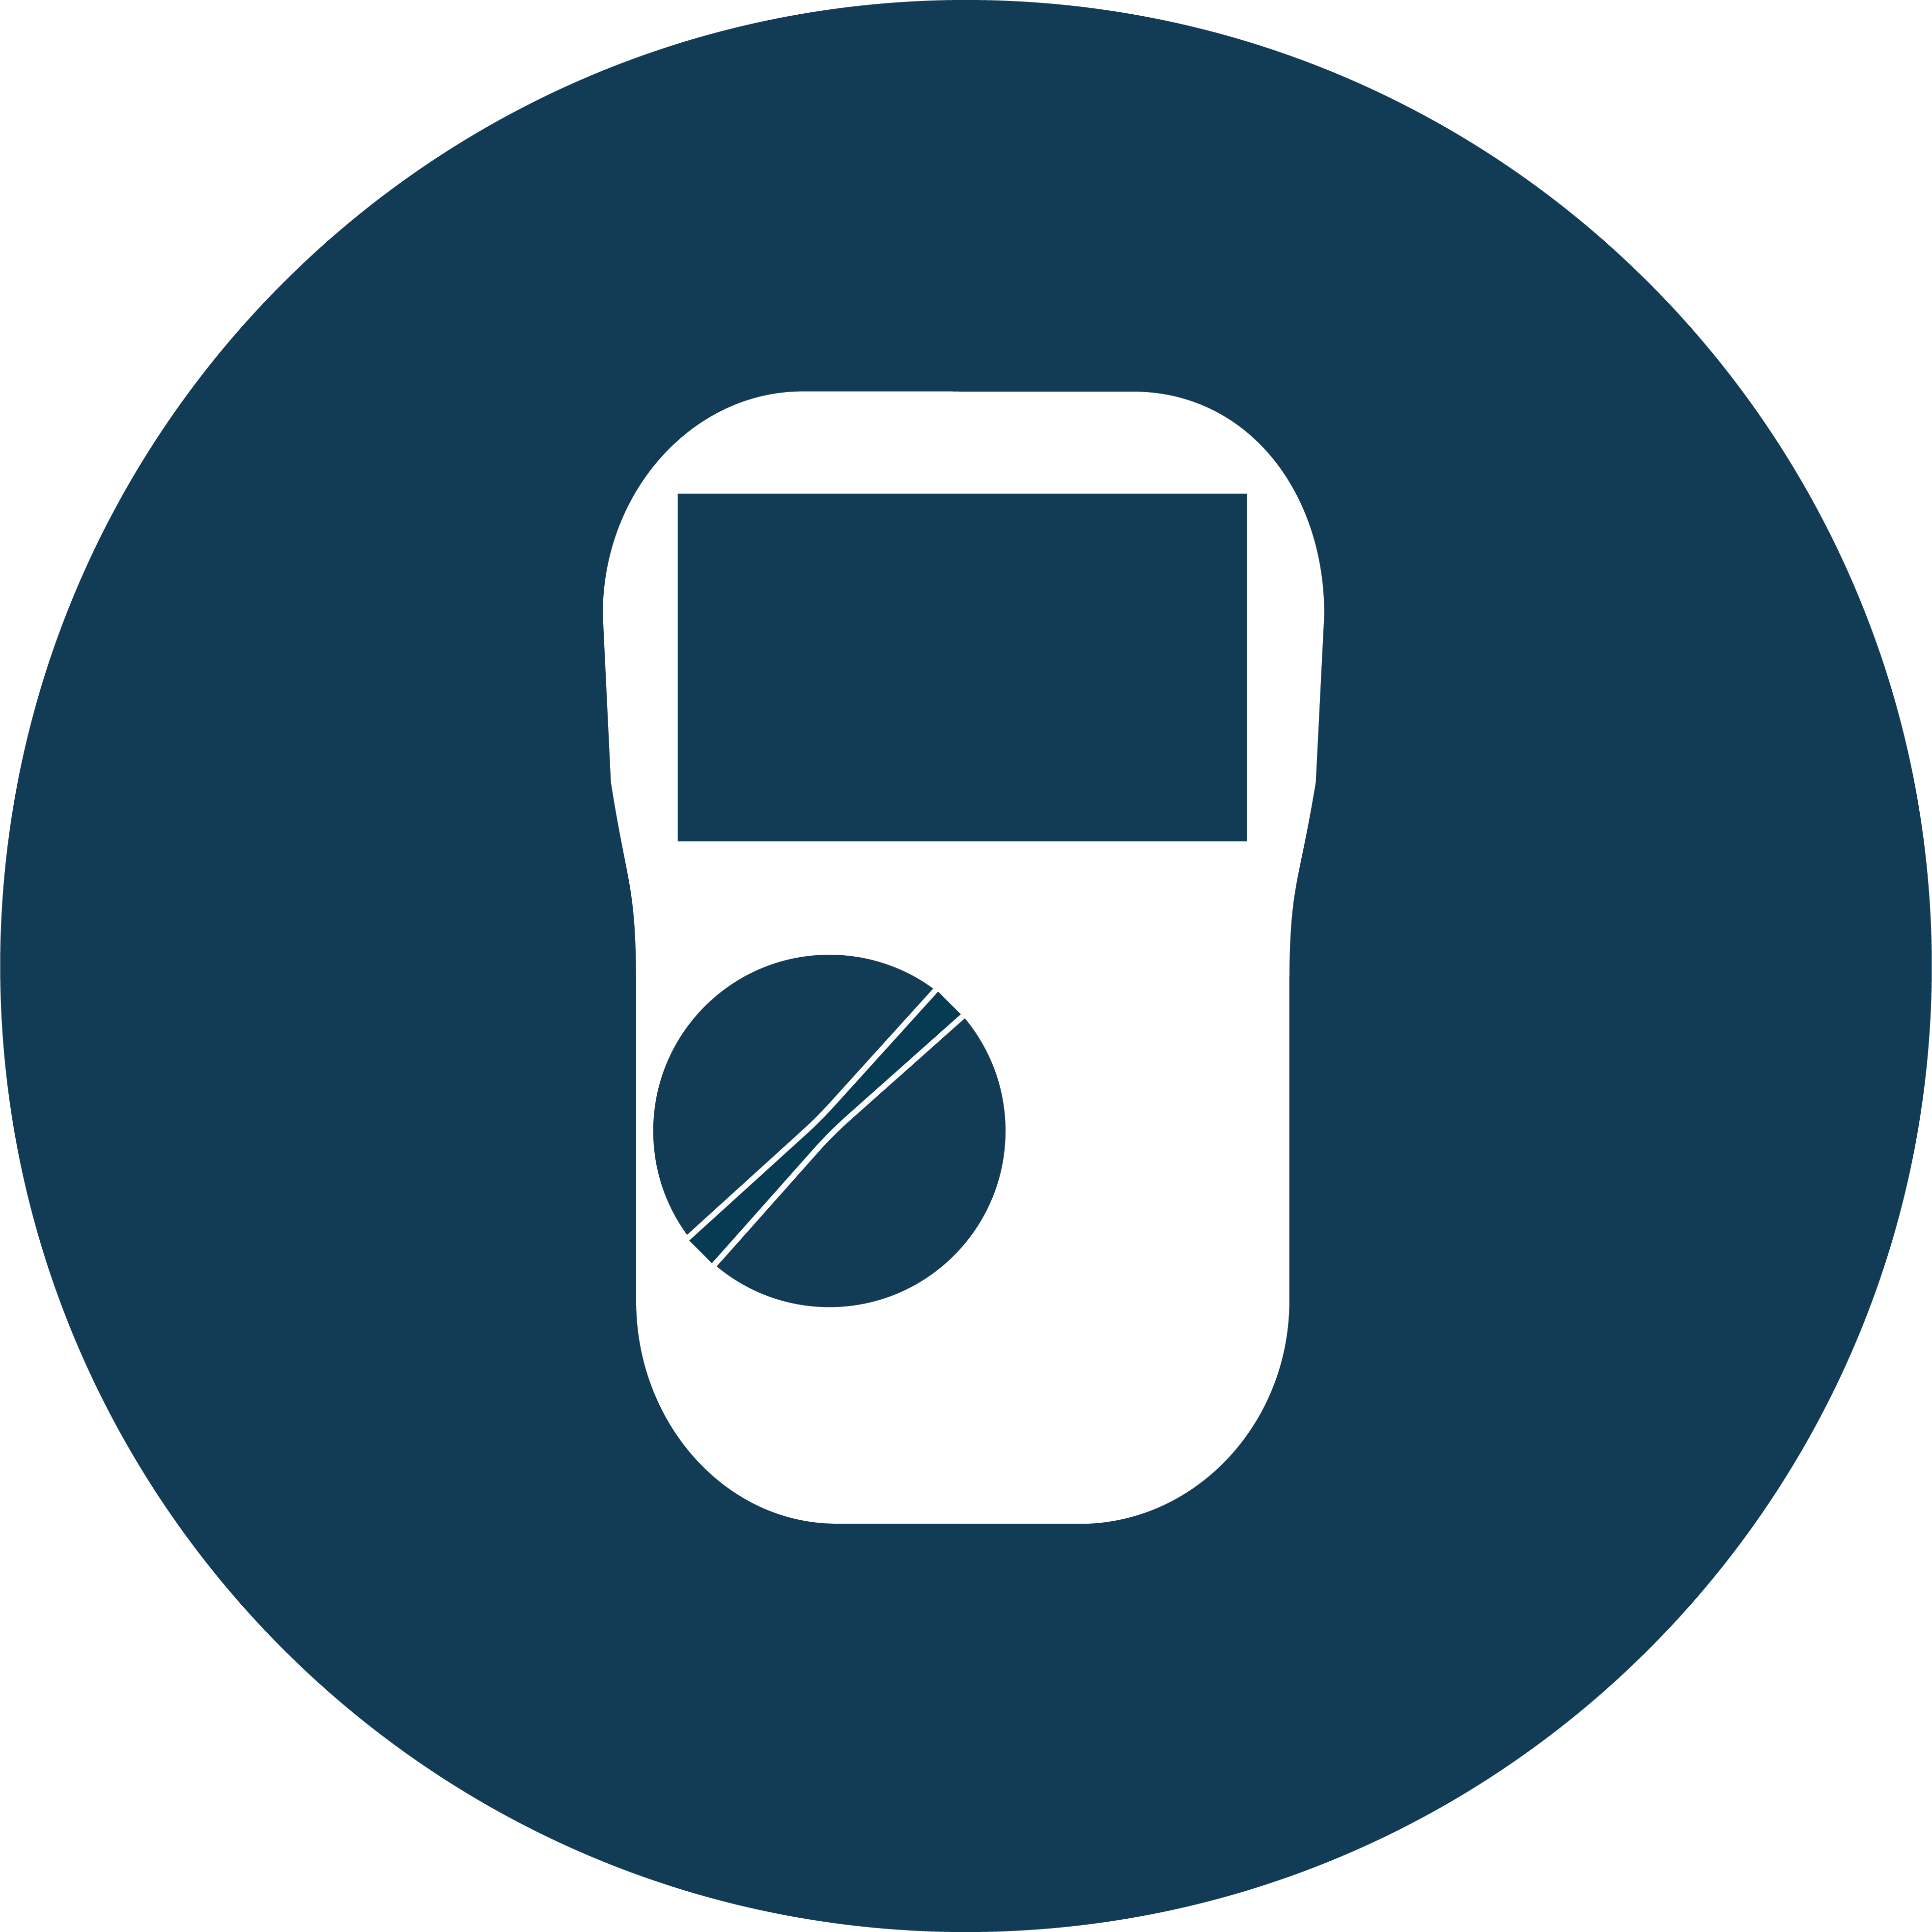 Test Equipment - Advocacy Icon (3933x3932)